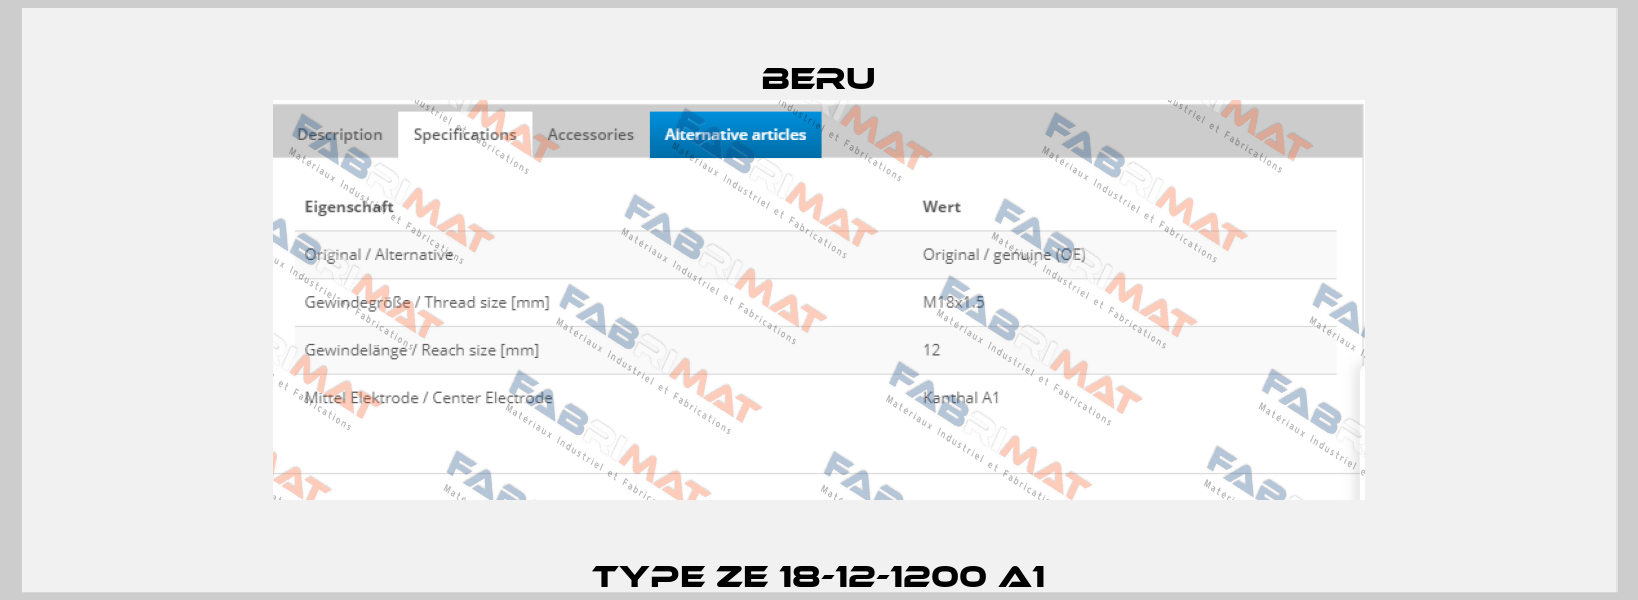 Type ZE 18-12-1200 A1 Beru